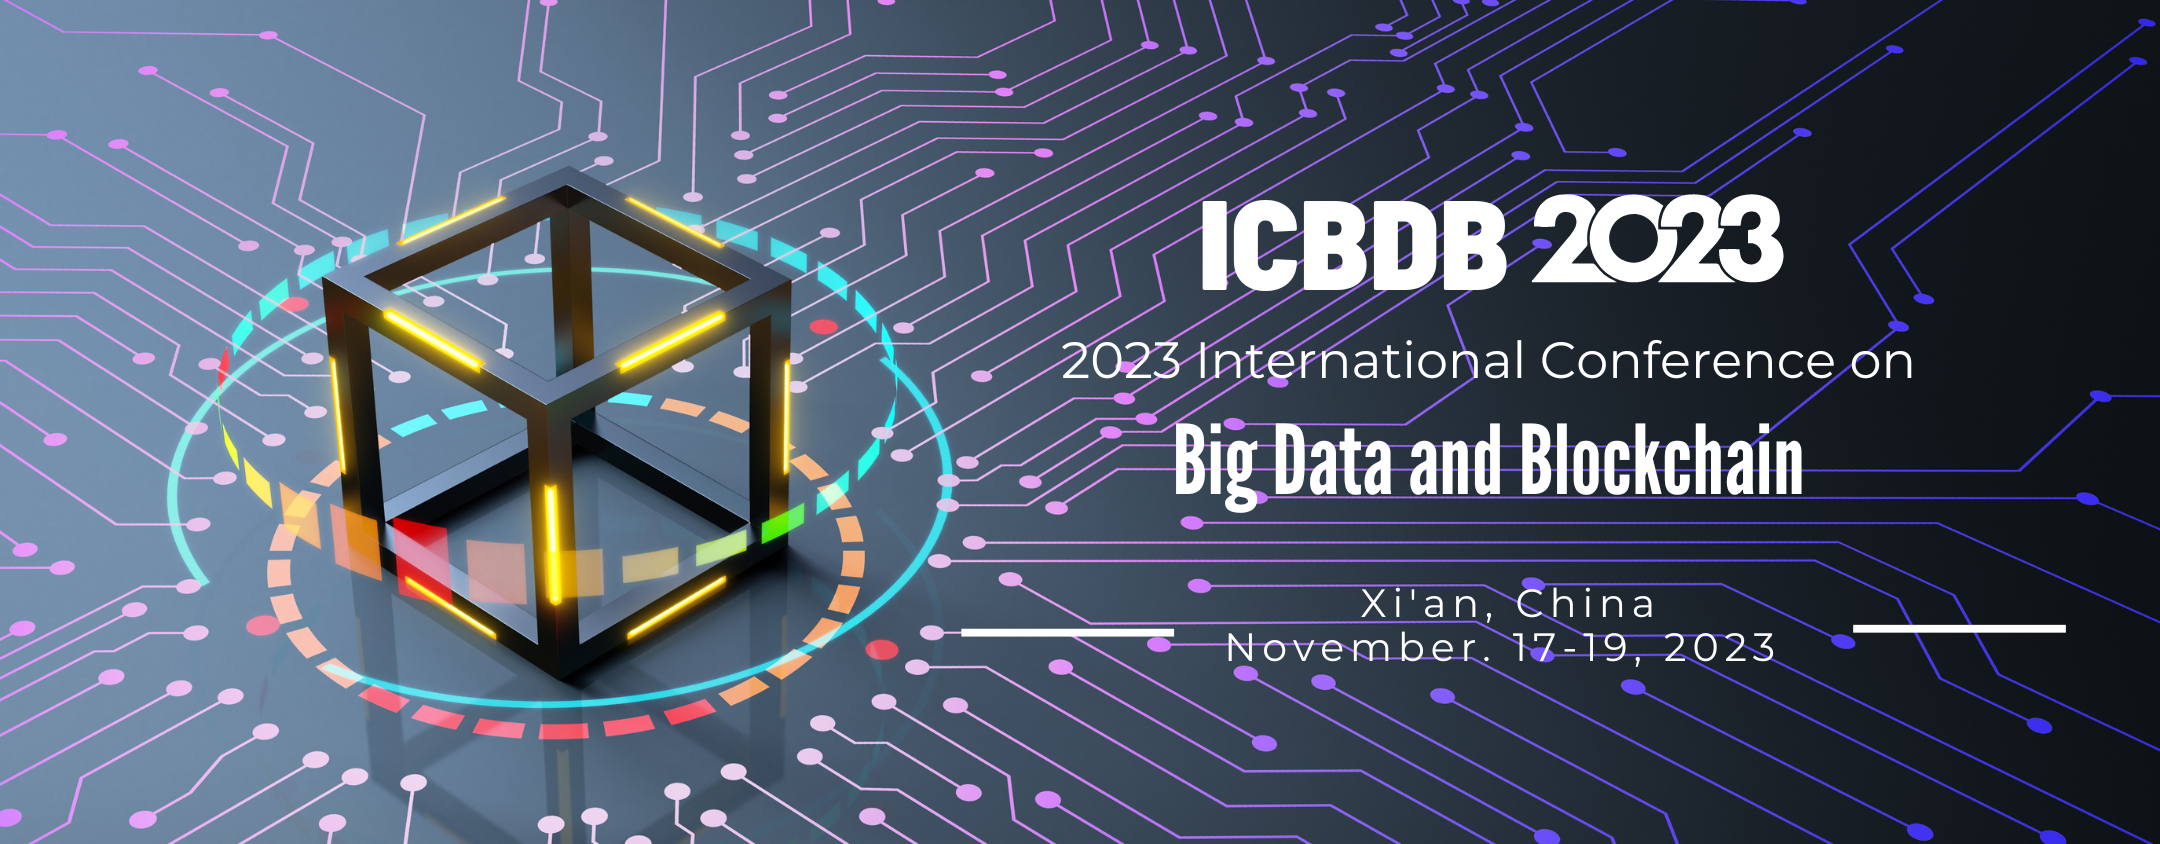 2023 International Conference on Big Data and Blockchain (ICBDB 2023), Xi'an, Shaanxi, China